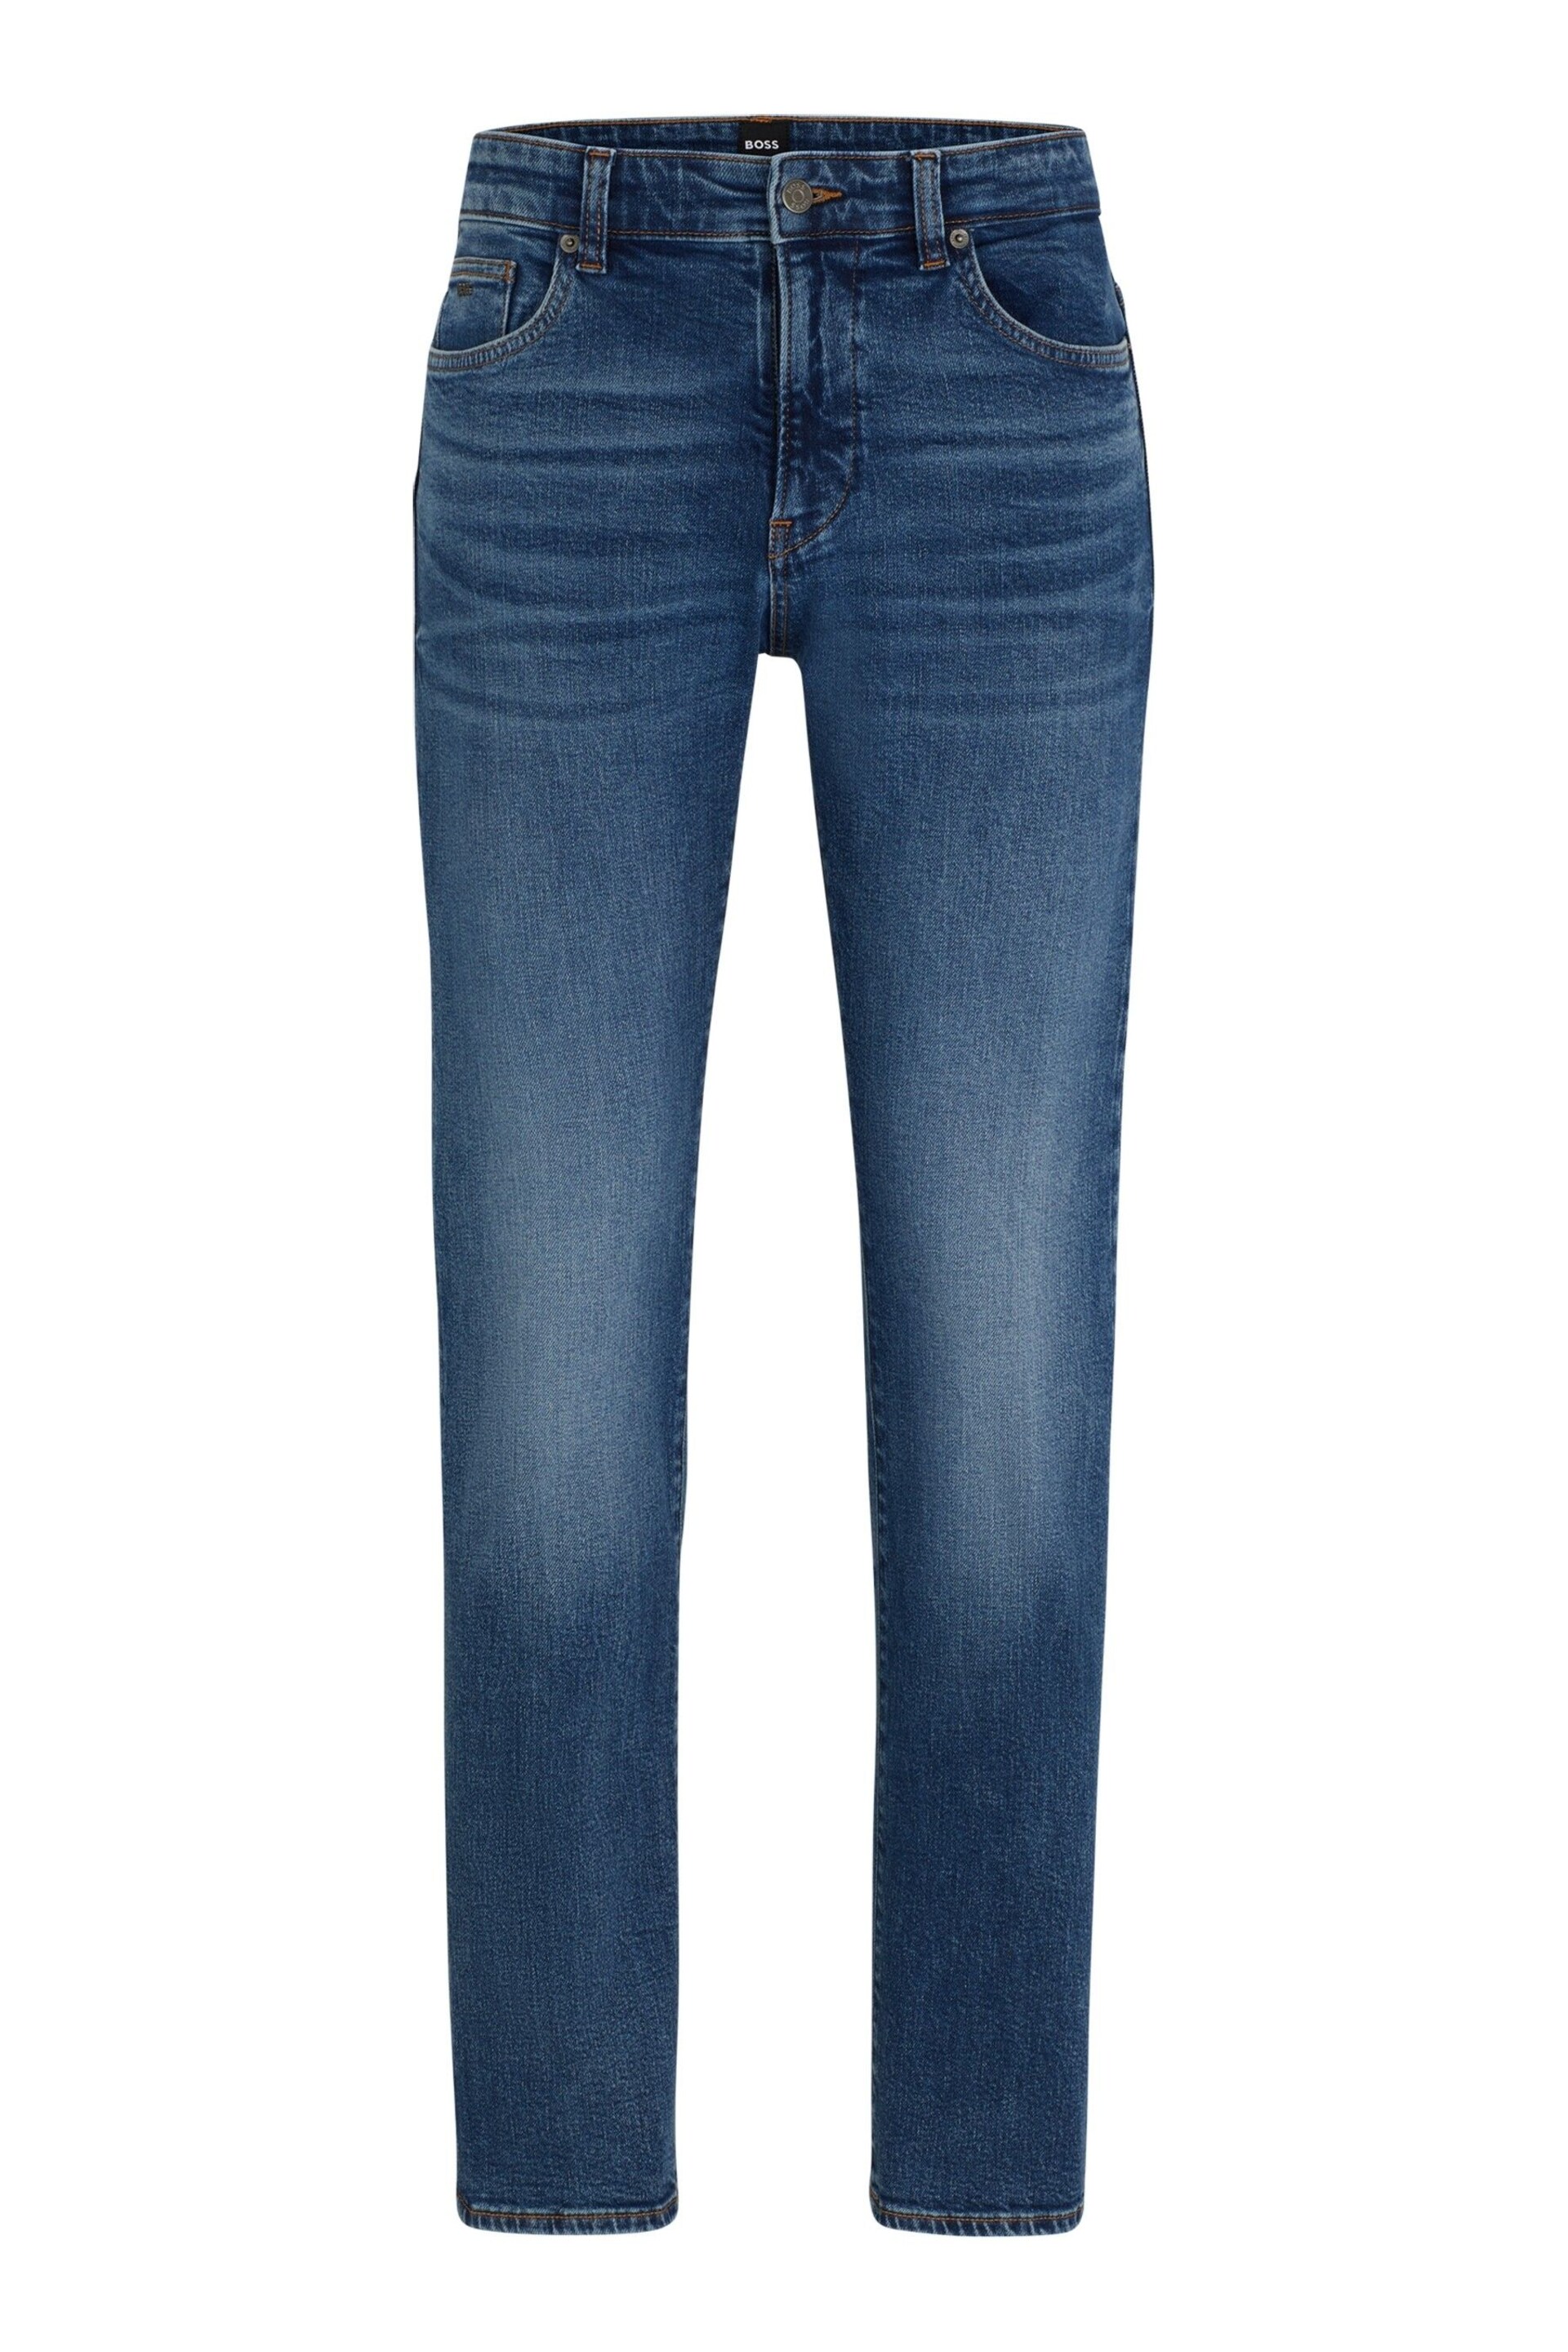 BOSS Blue Denim Delaware Slim Fit Stretch Jeans - Image 5 of 5